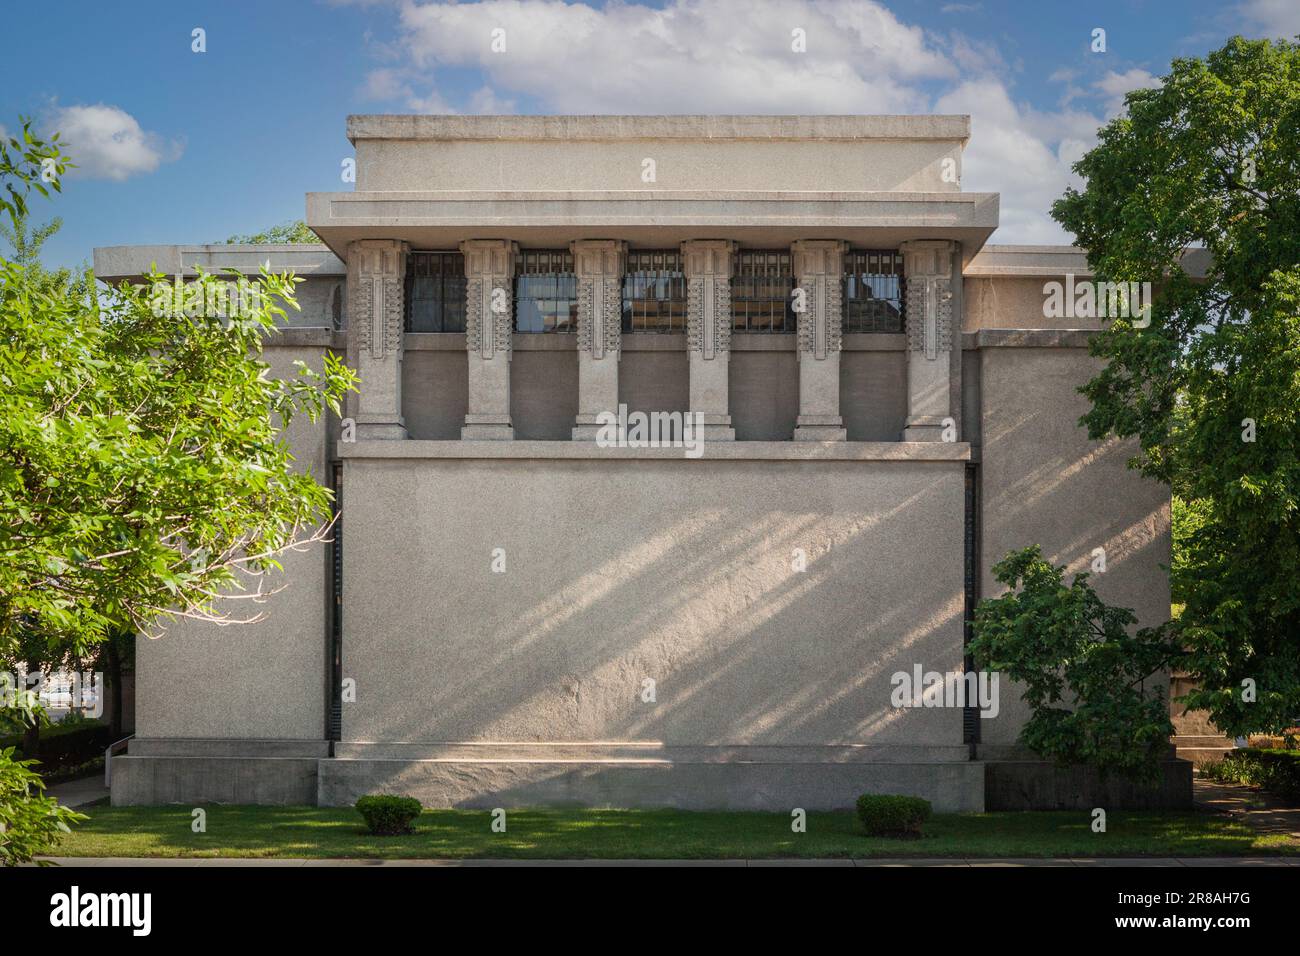 Unity Temple, seminal influential design, architect Frank Lloyd Wright, 1905, Oak Park, Illinois, suburb of Chicago. Stock Photo